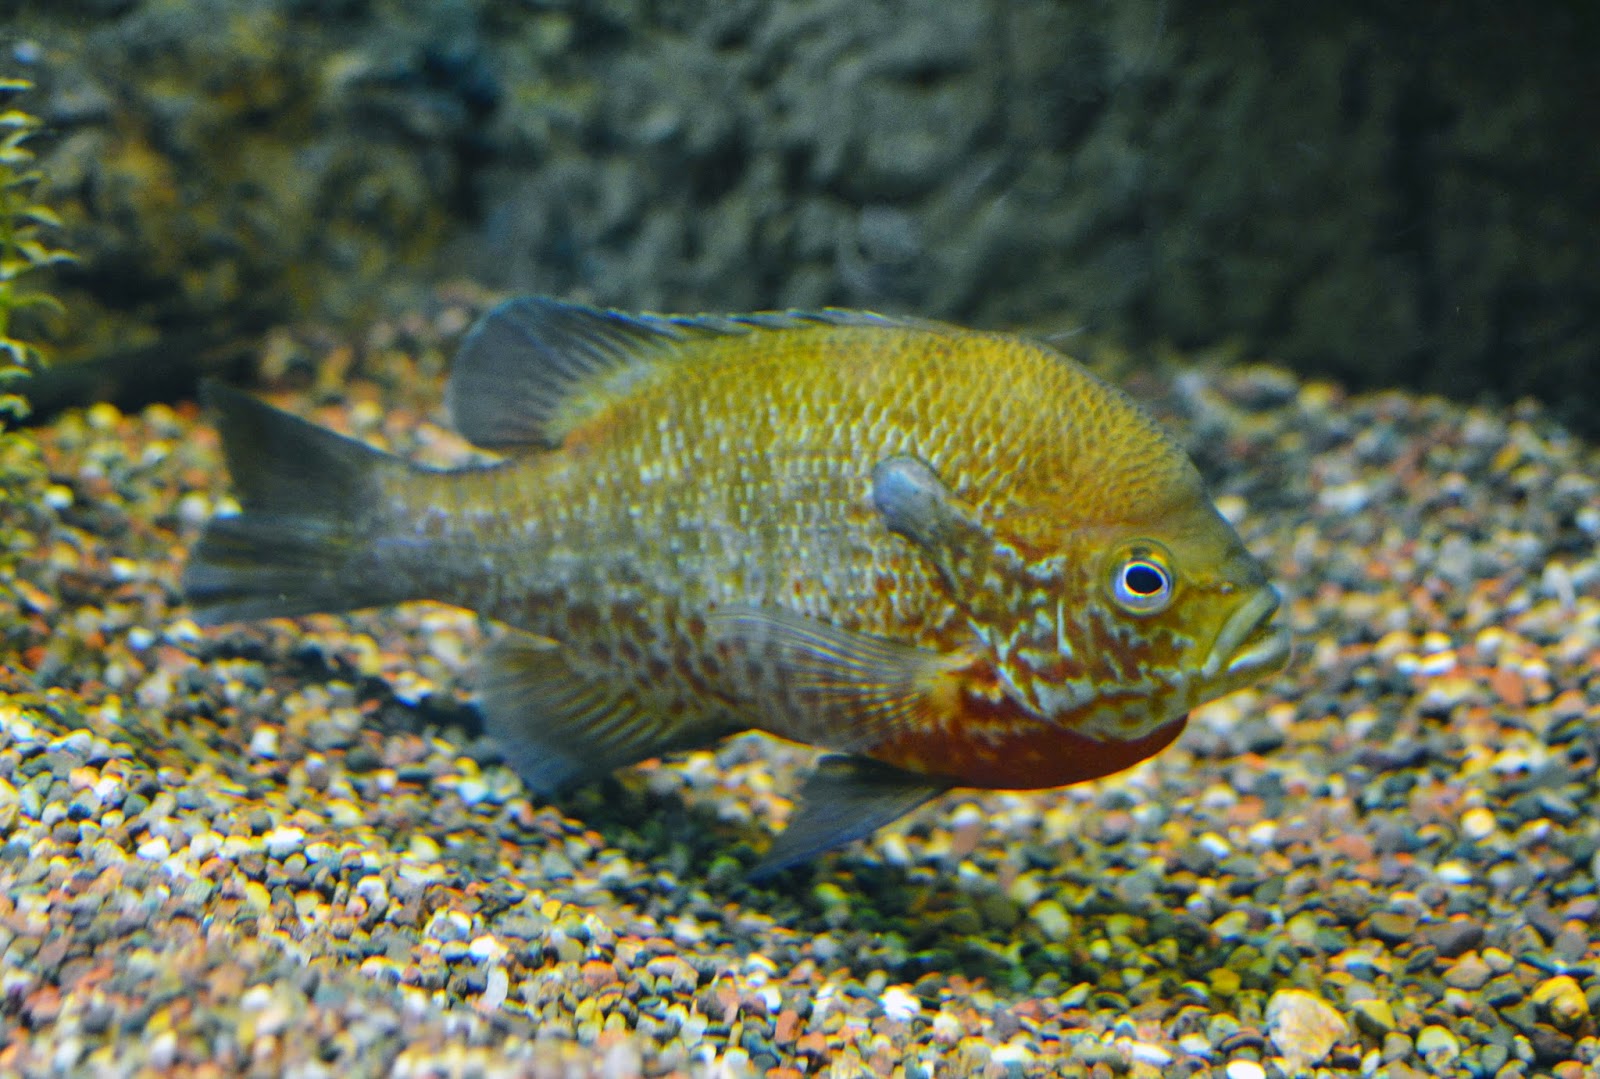 Virginia Fishes: Redbreast sunfish fry development